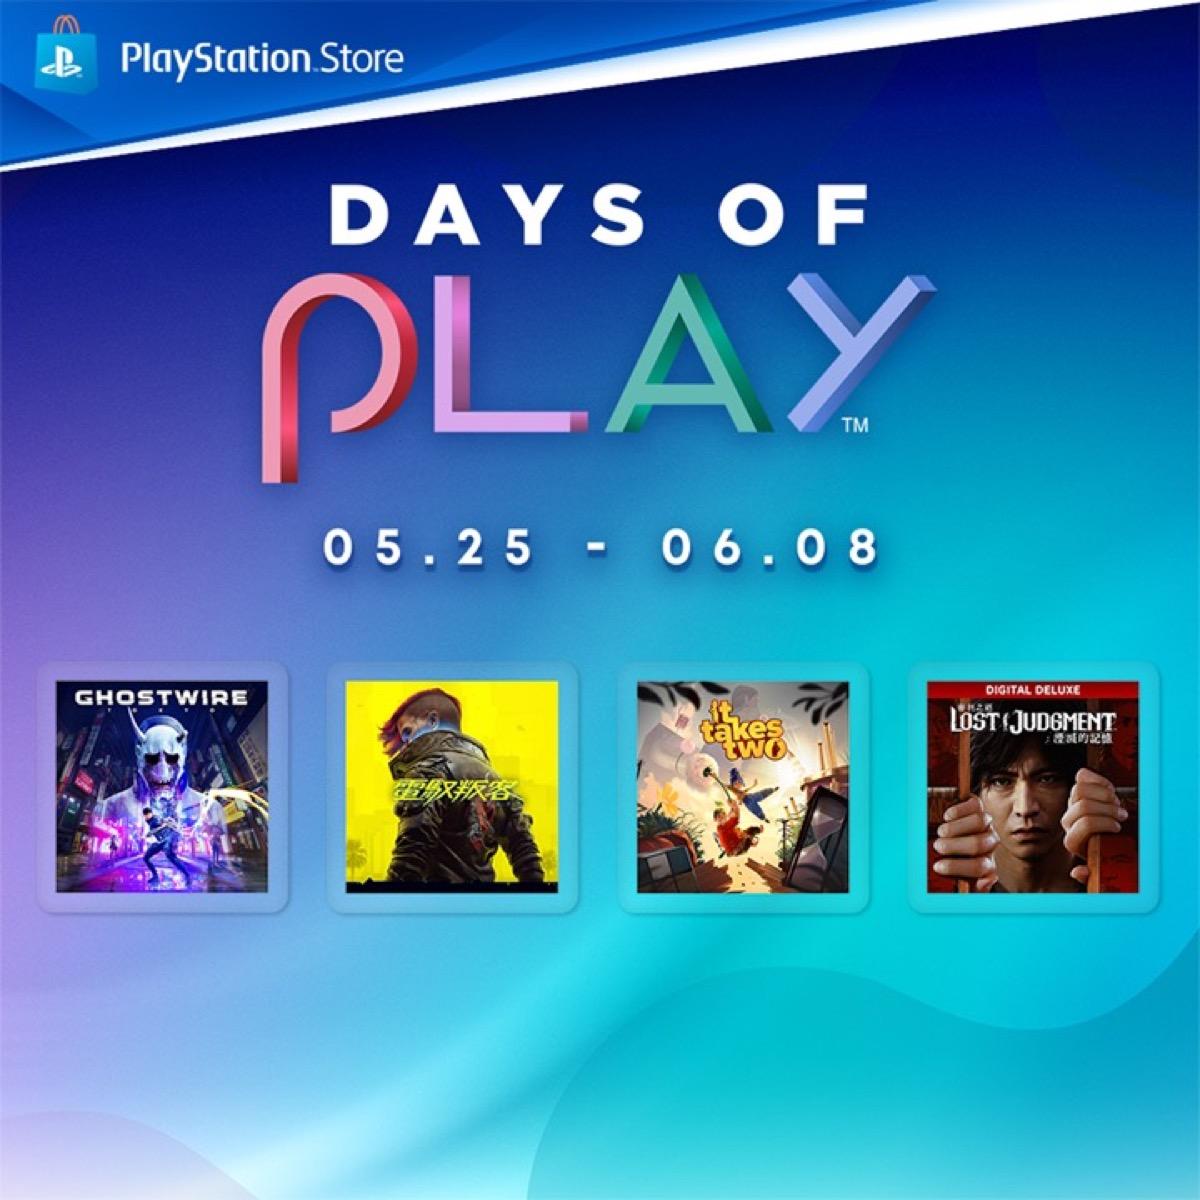 「Days of Play」全球優惠活動即日展開  限時15天激減優惠